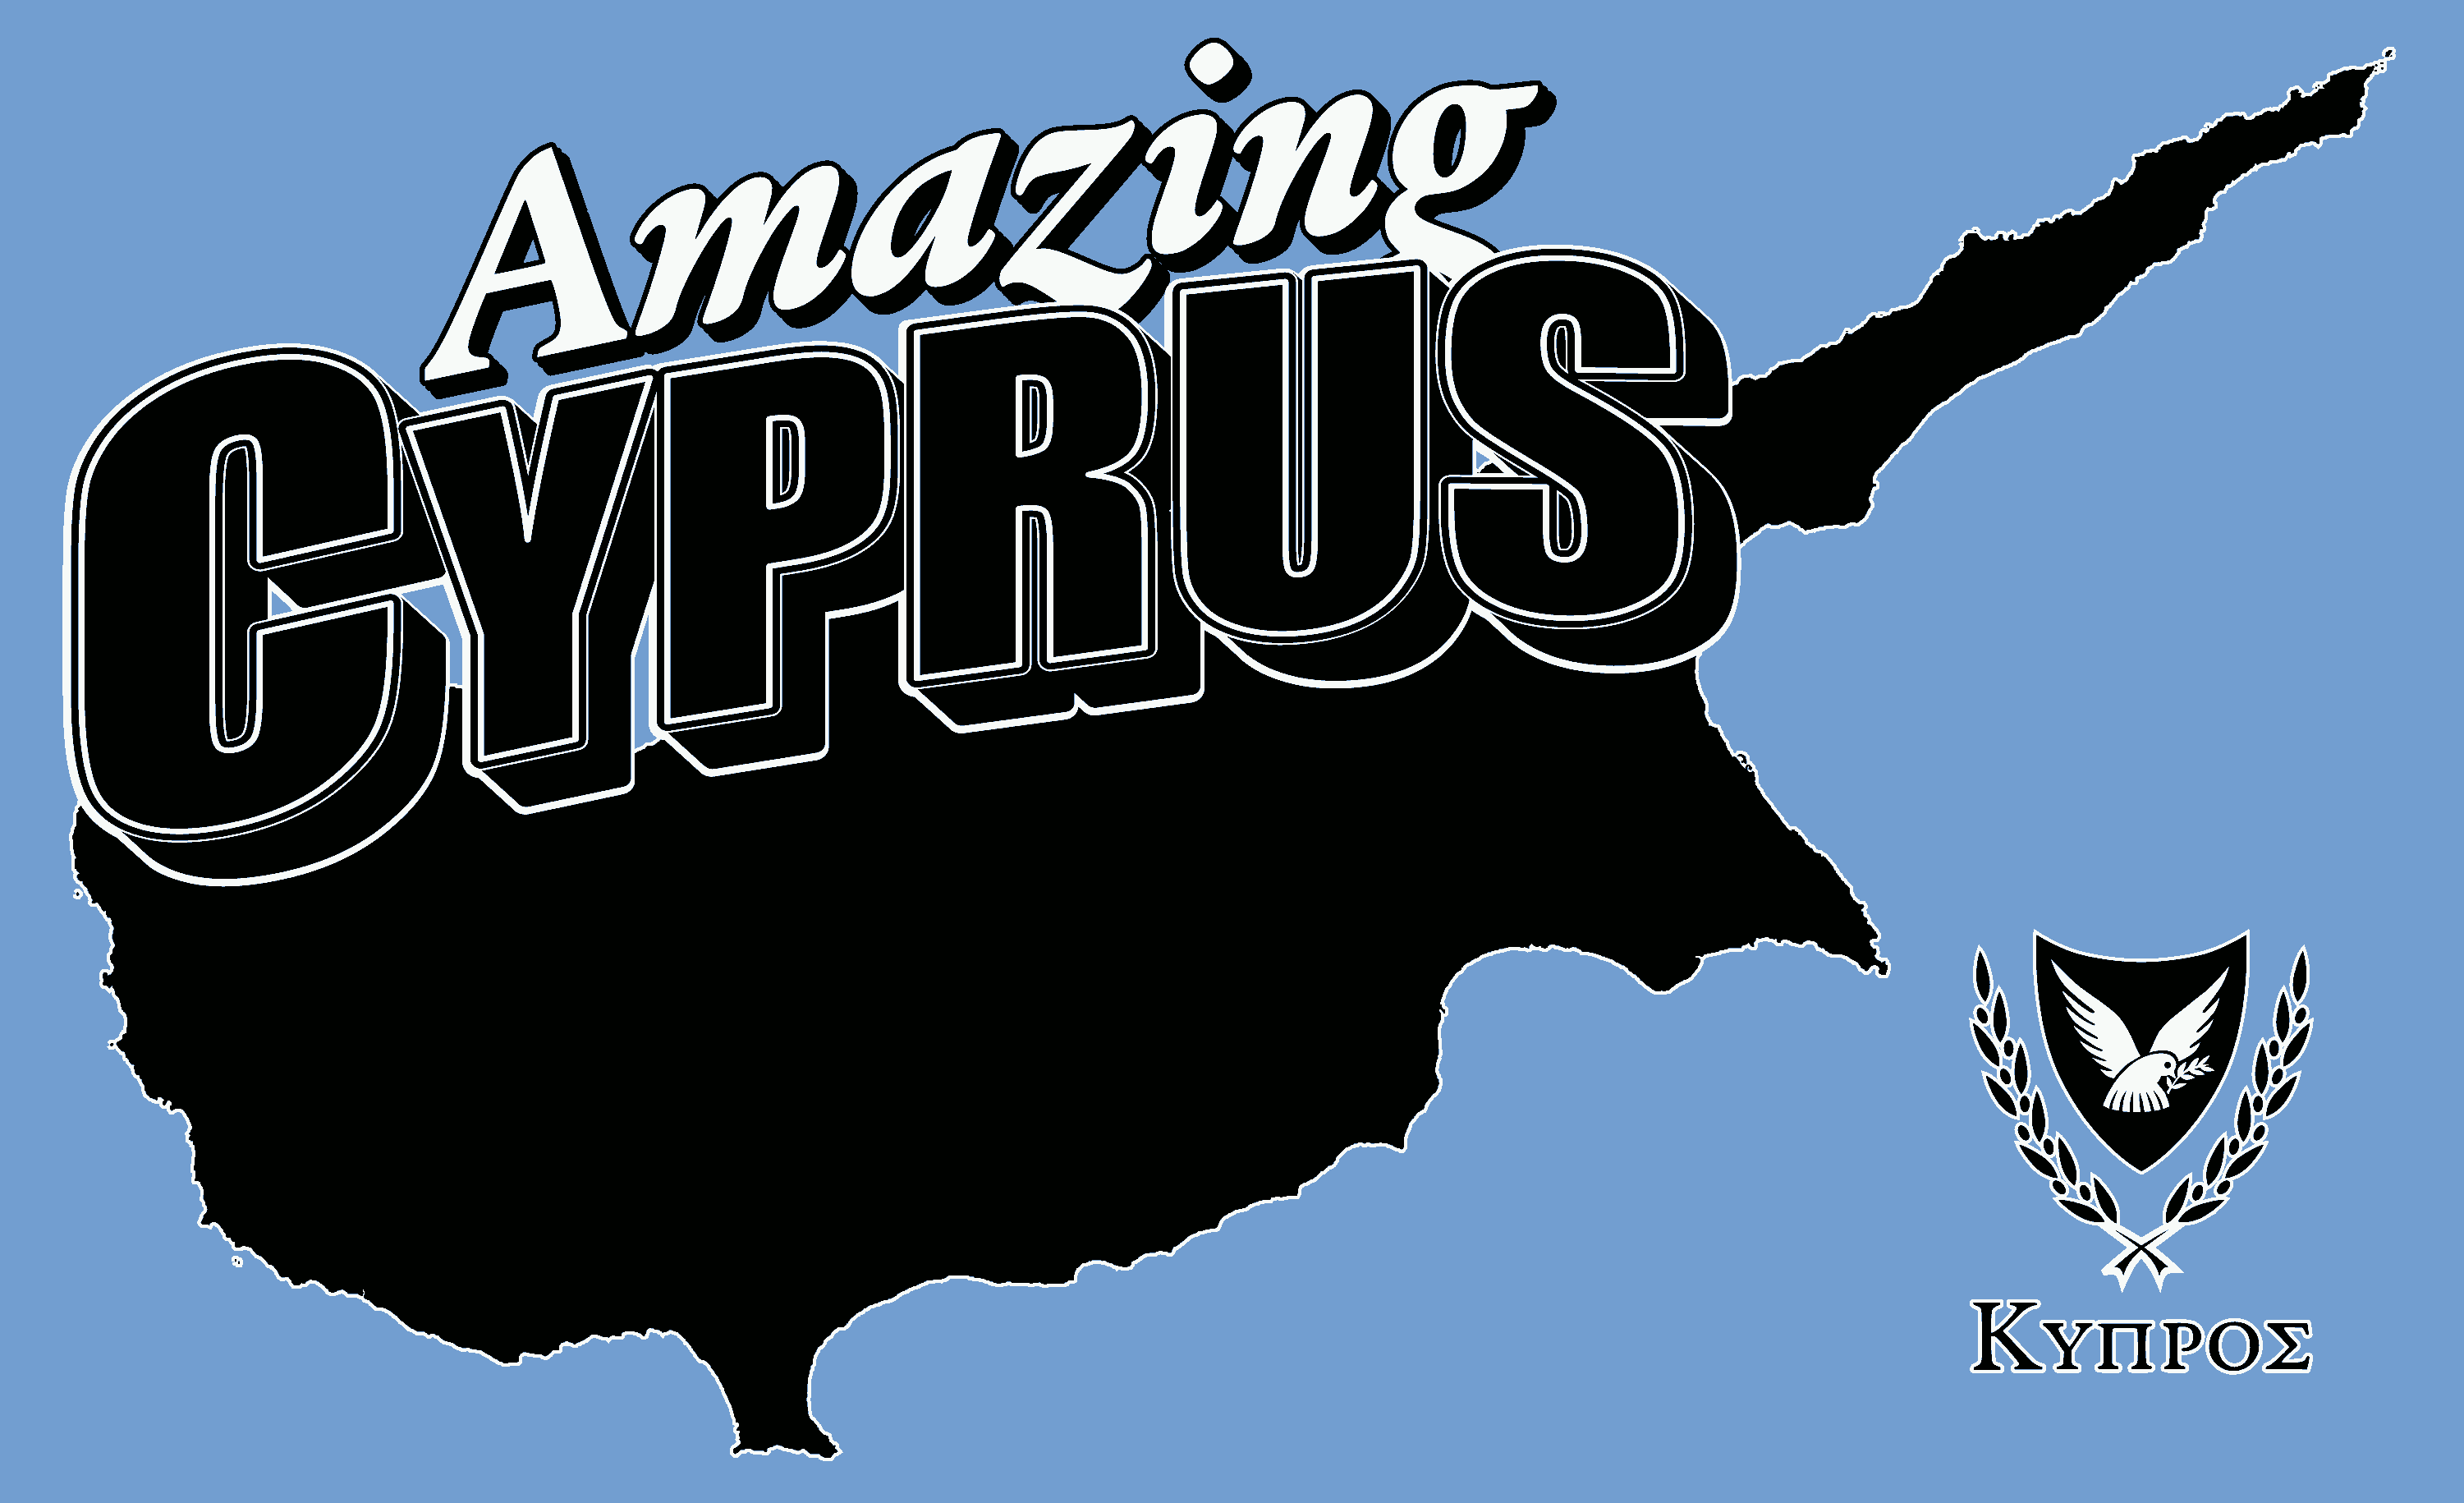 Amazing Cyprus